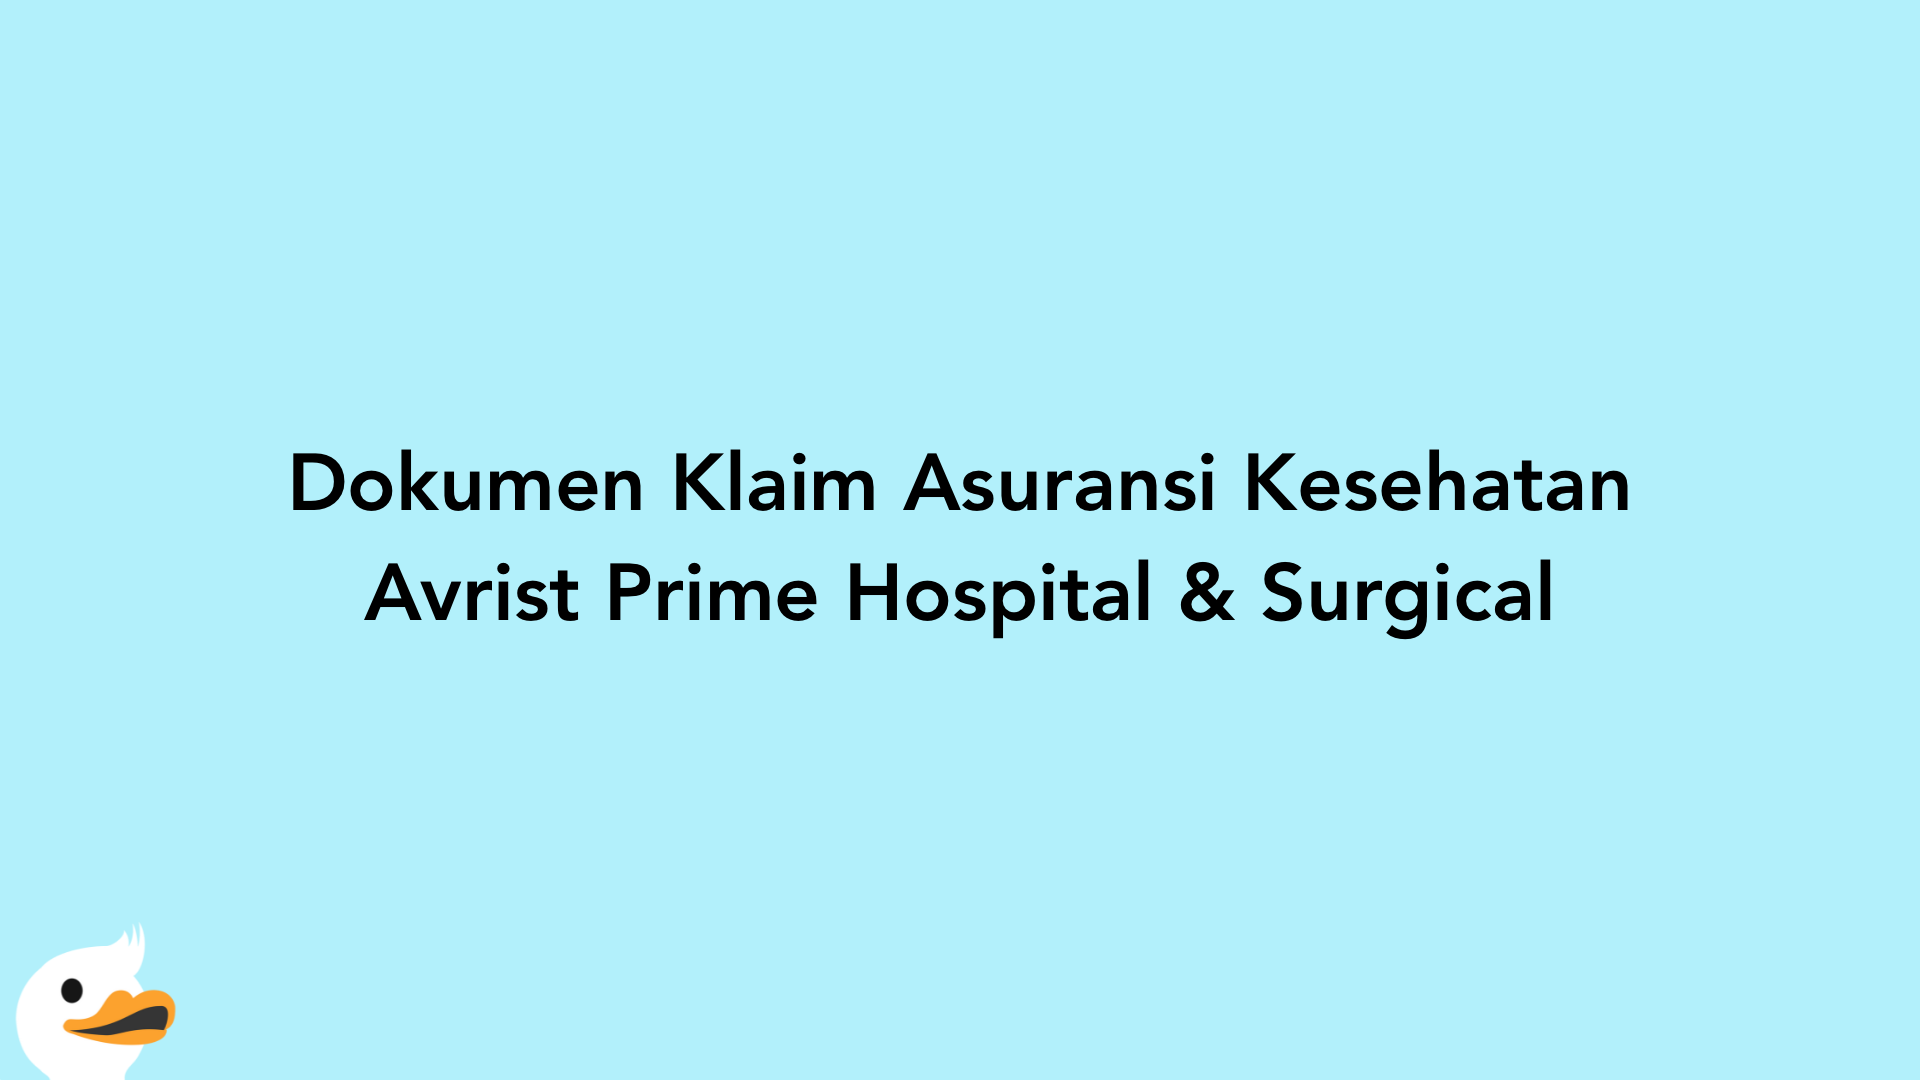 Dokumen Klaim Asuransi Kesehatan Avrist Prime Hospital & Surgical